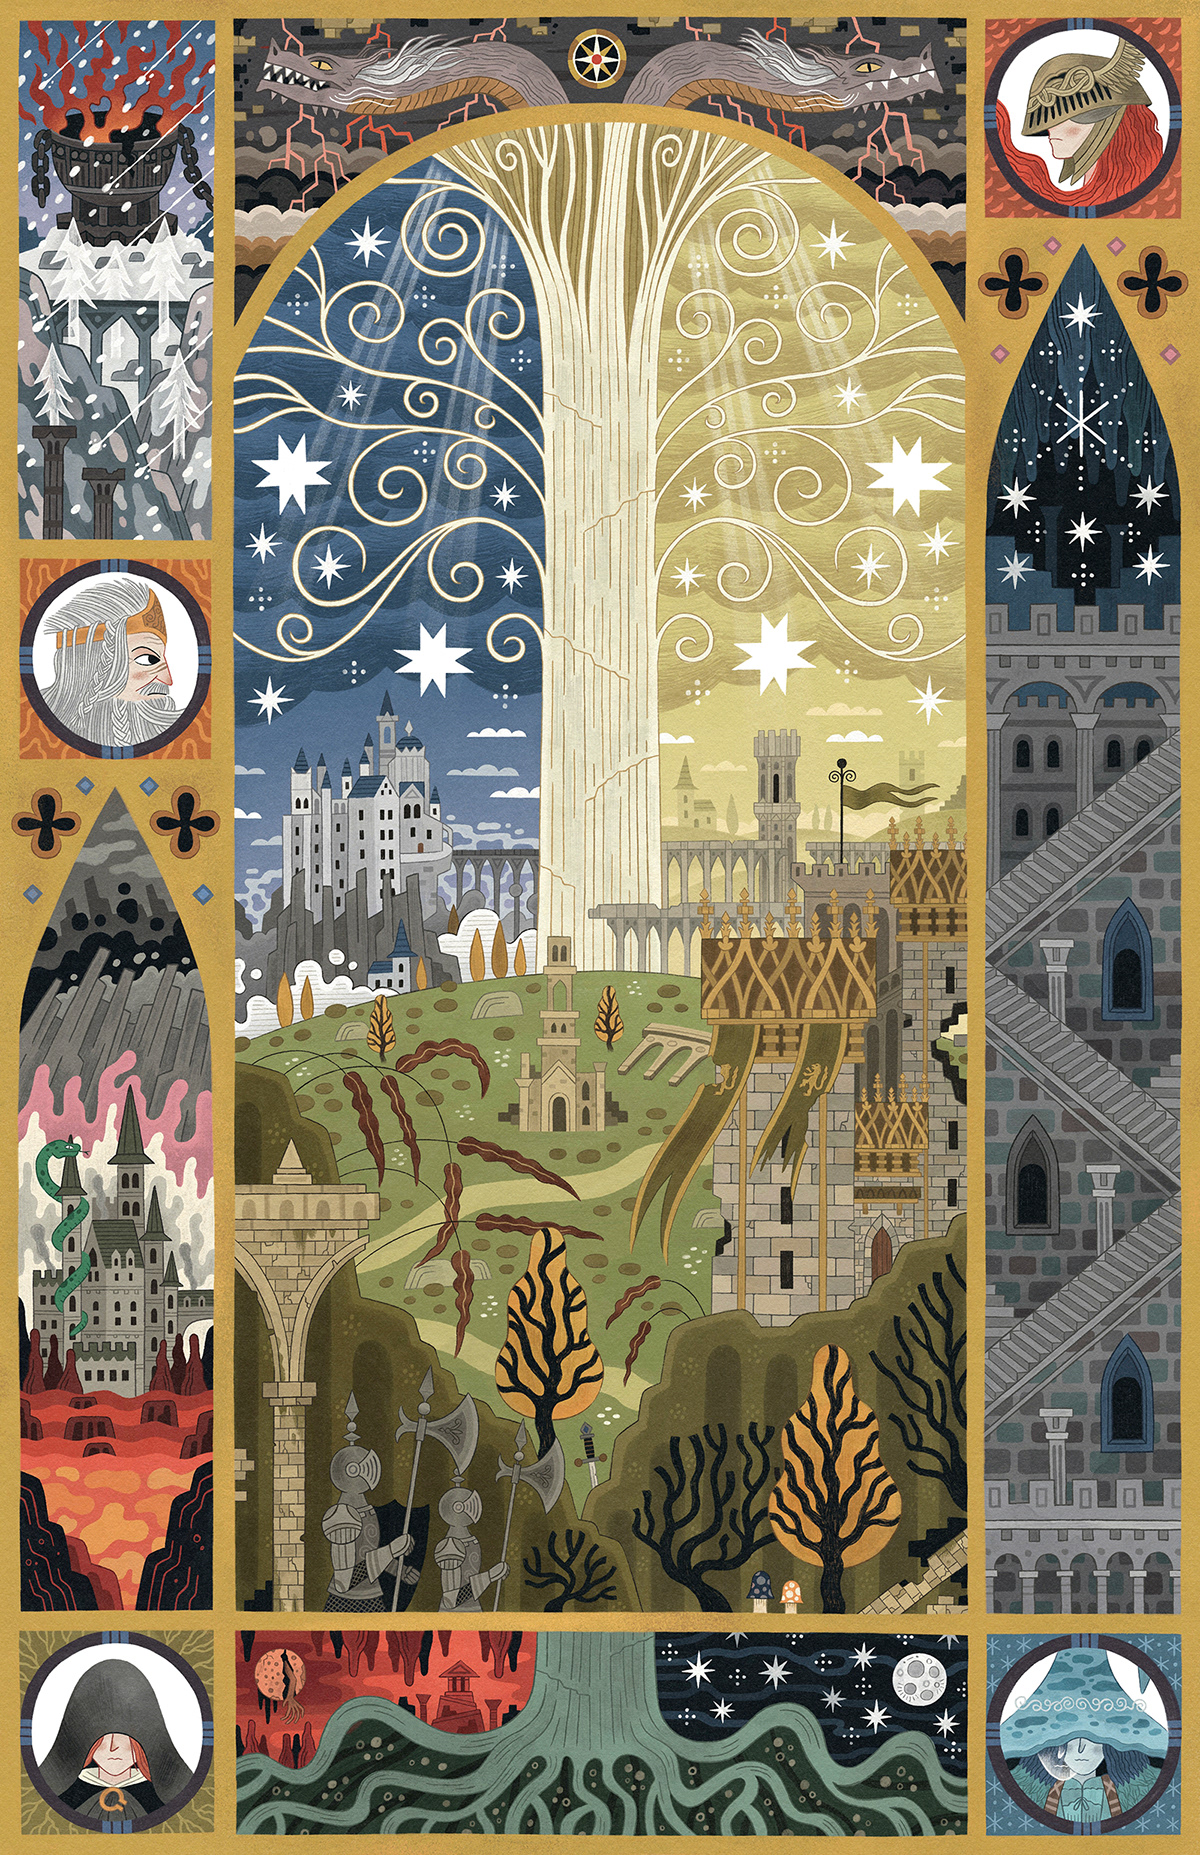 ILLUSTRATION  elden ring medieval fantasy Picture book children's book poster print the lands between